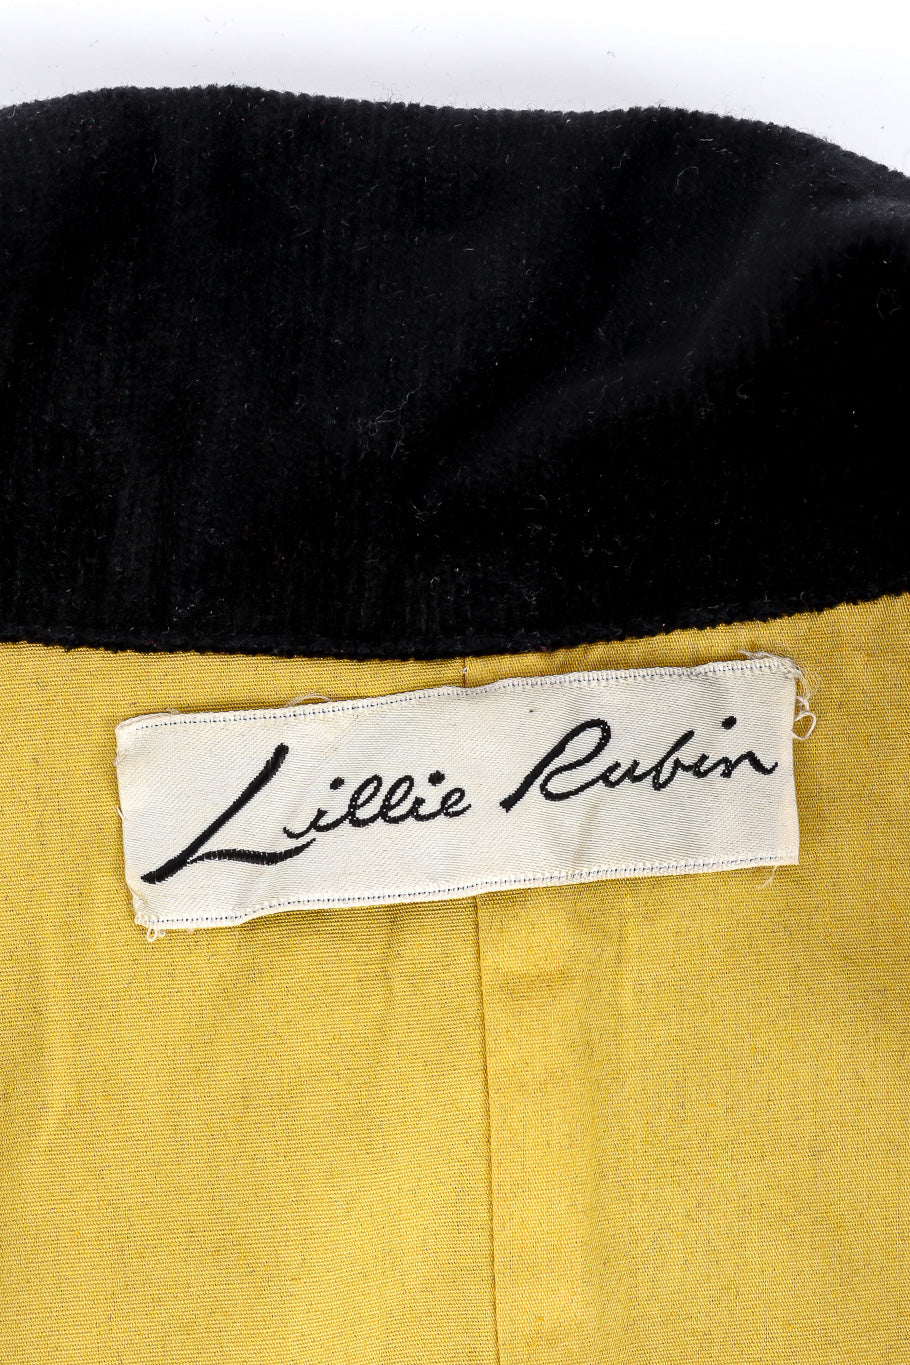 jacket and pant set by Lillie Rubin label @recessla